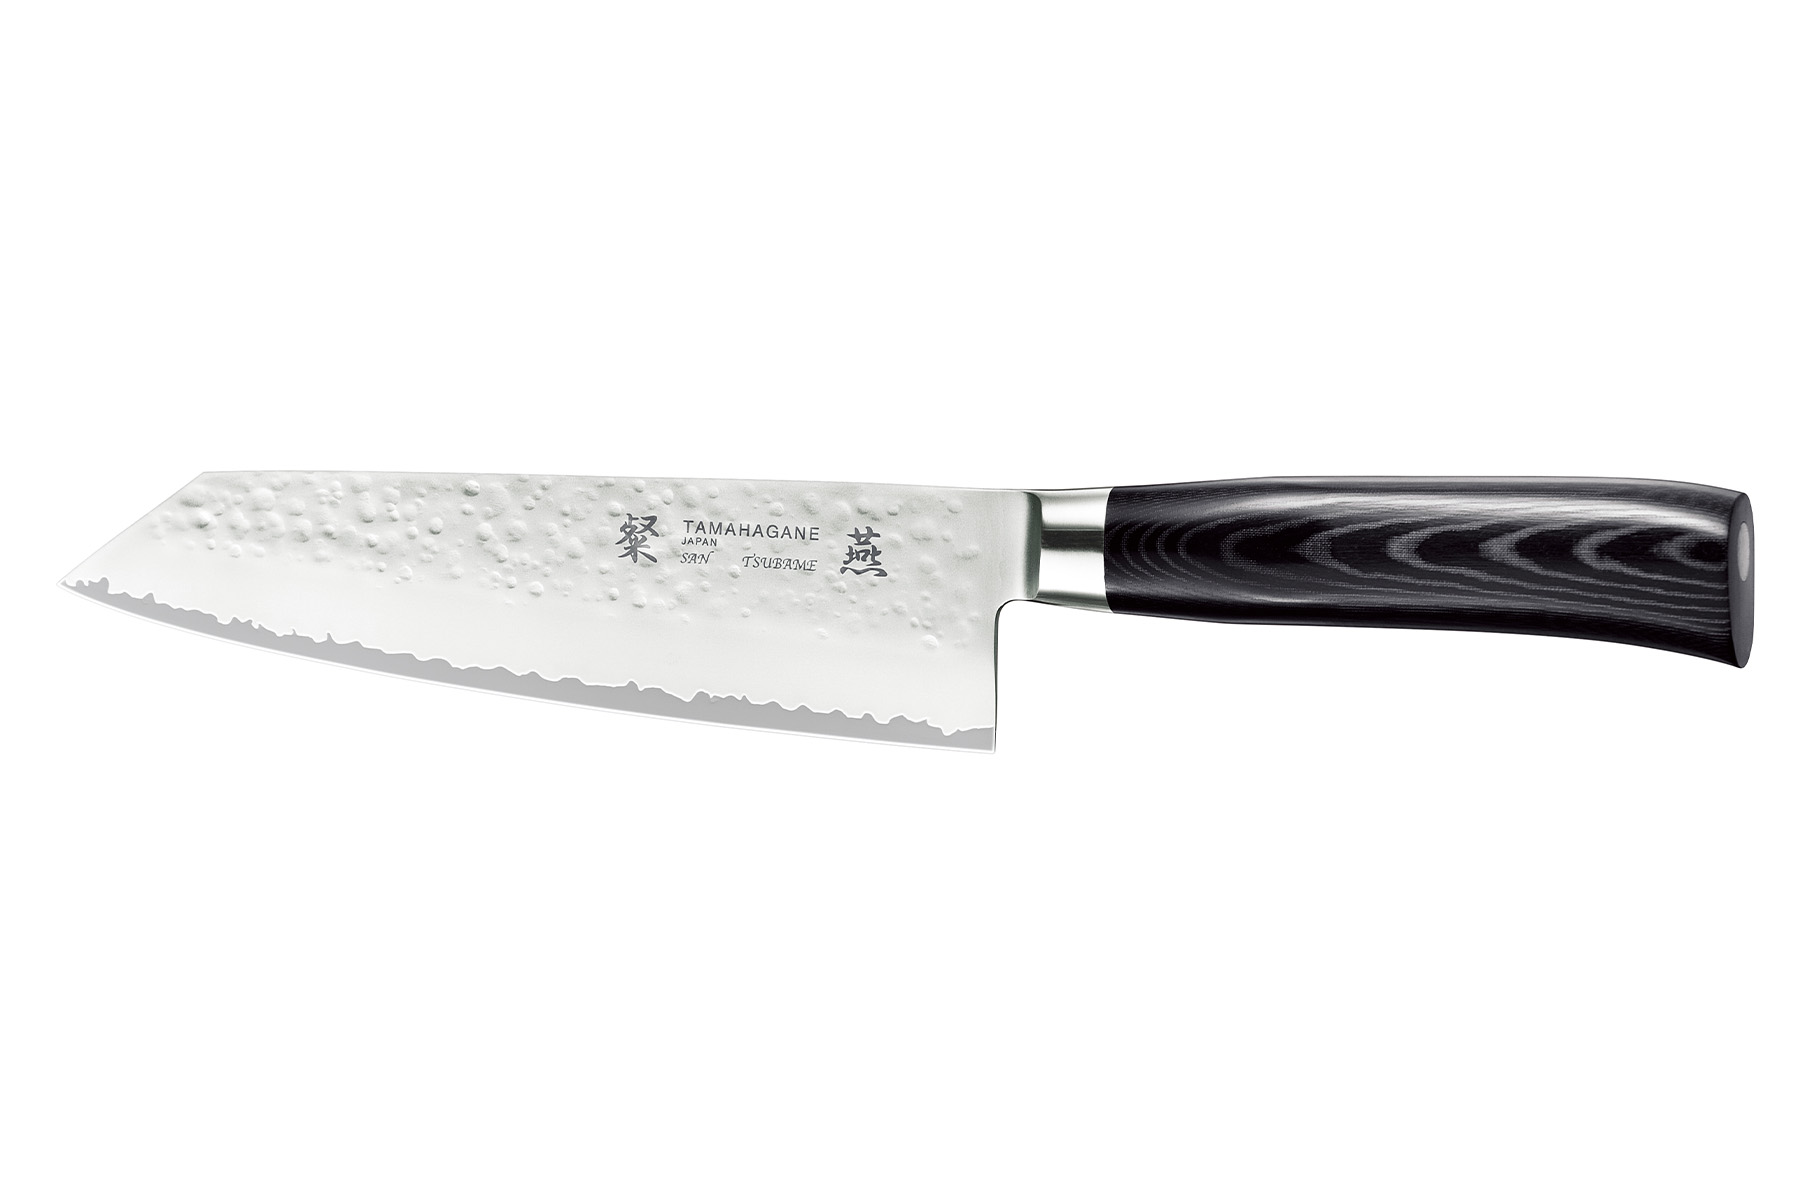 Couteau japonais Tamahagane Tsubame Hammered - Couteau kengata 19  cm